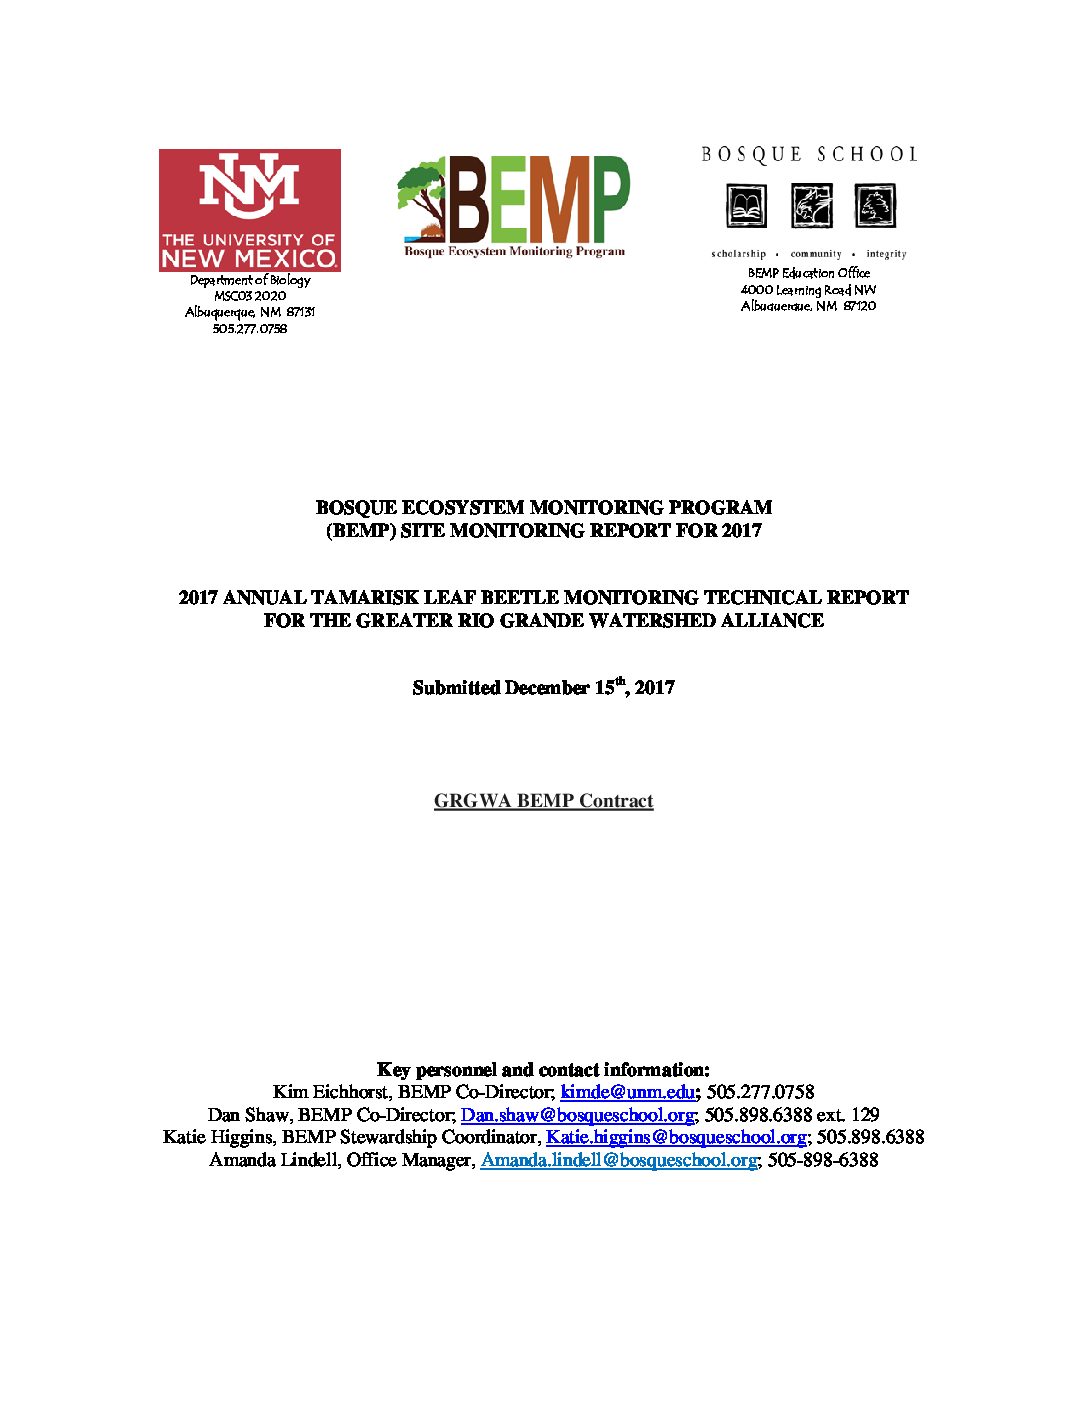 Bosque Ecosystem Monitoring Program (BEMP) Site Monitoring Report for 2017